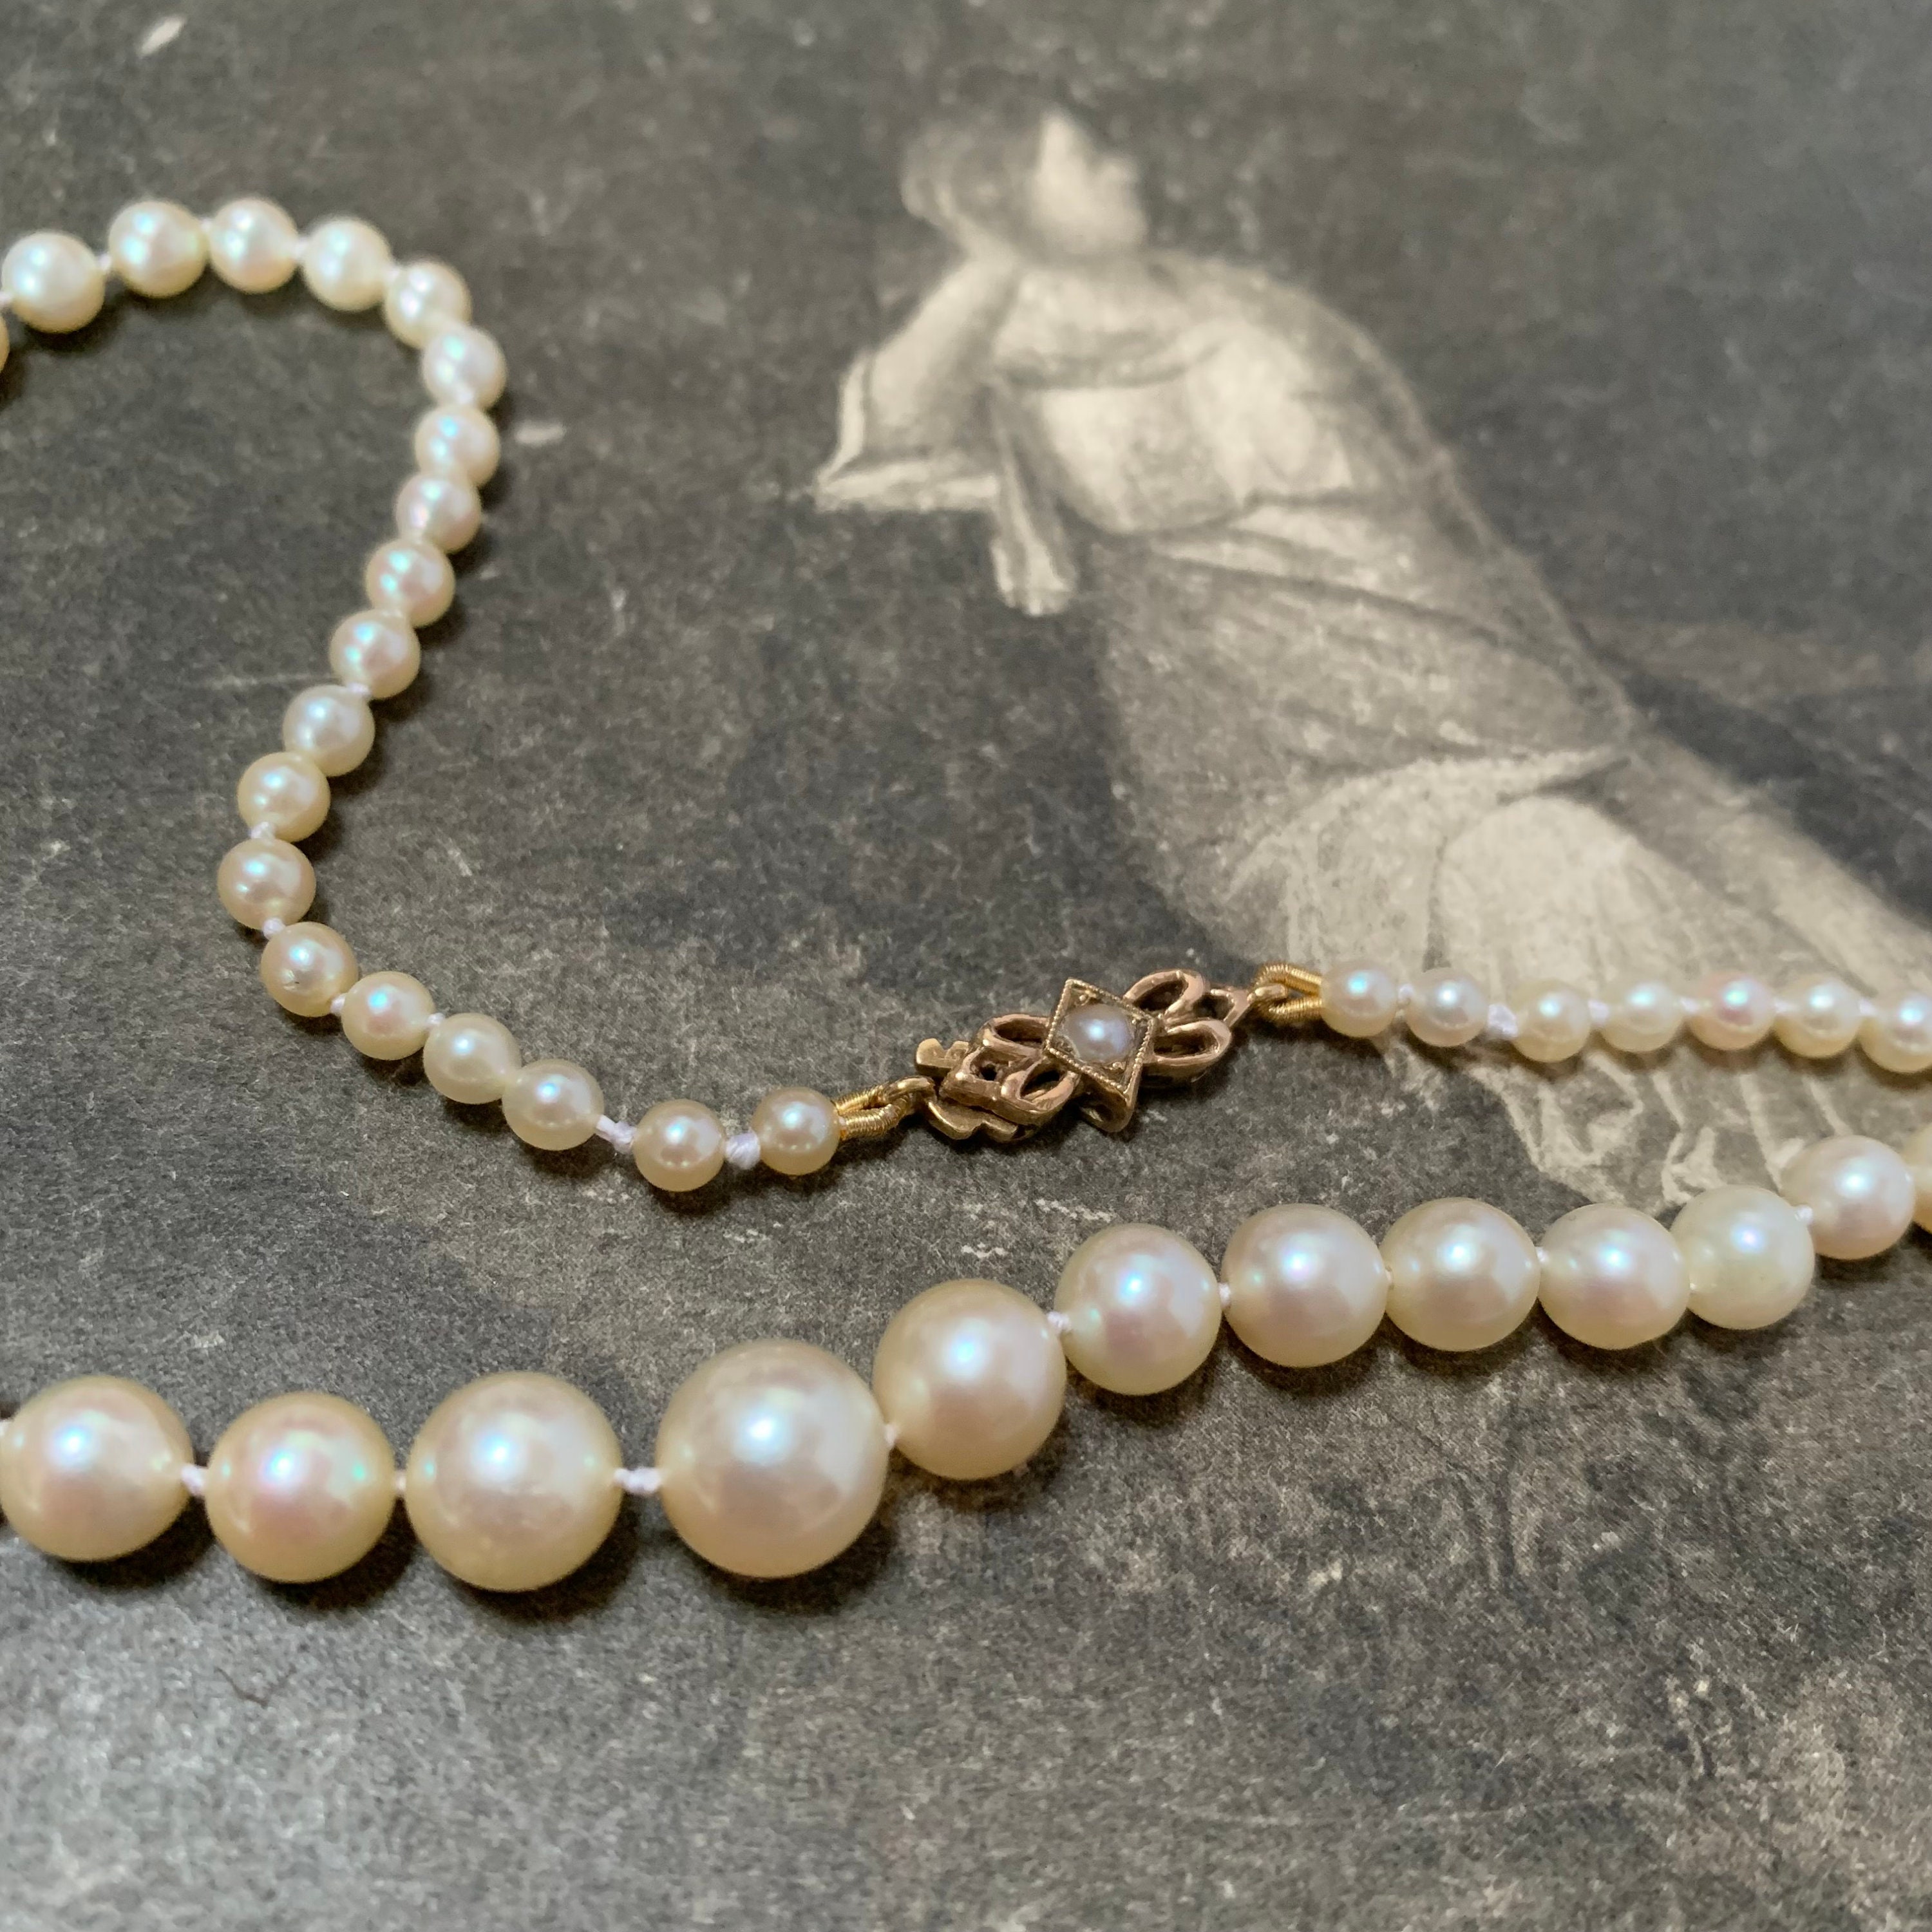 Vintage Graduated Pearl Necklace With 9Ct Gold Set Clasp & Full English Hallmark. Wonderful Bridal Jewellery